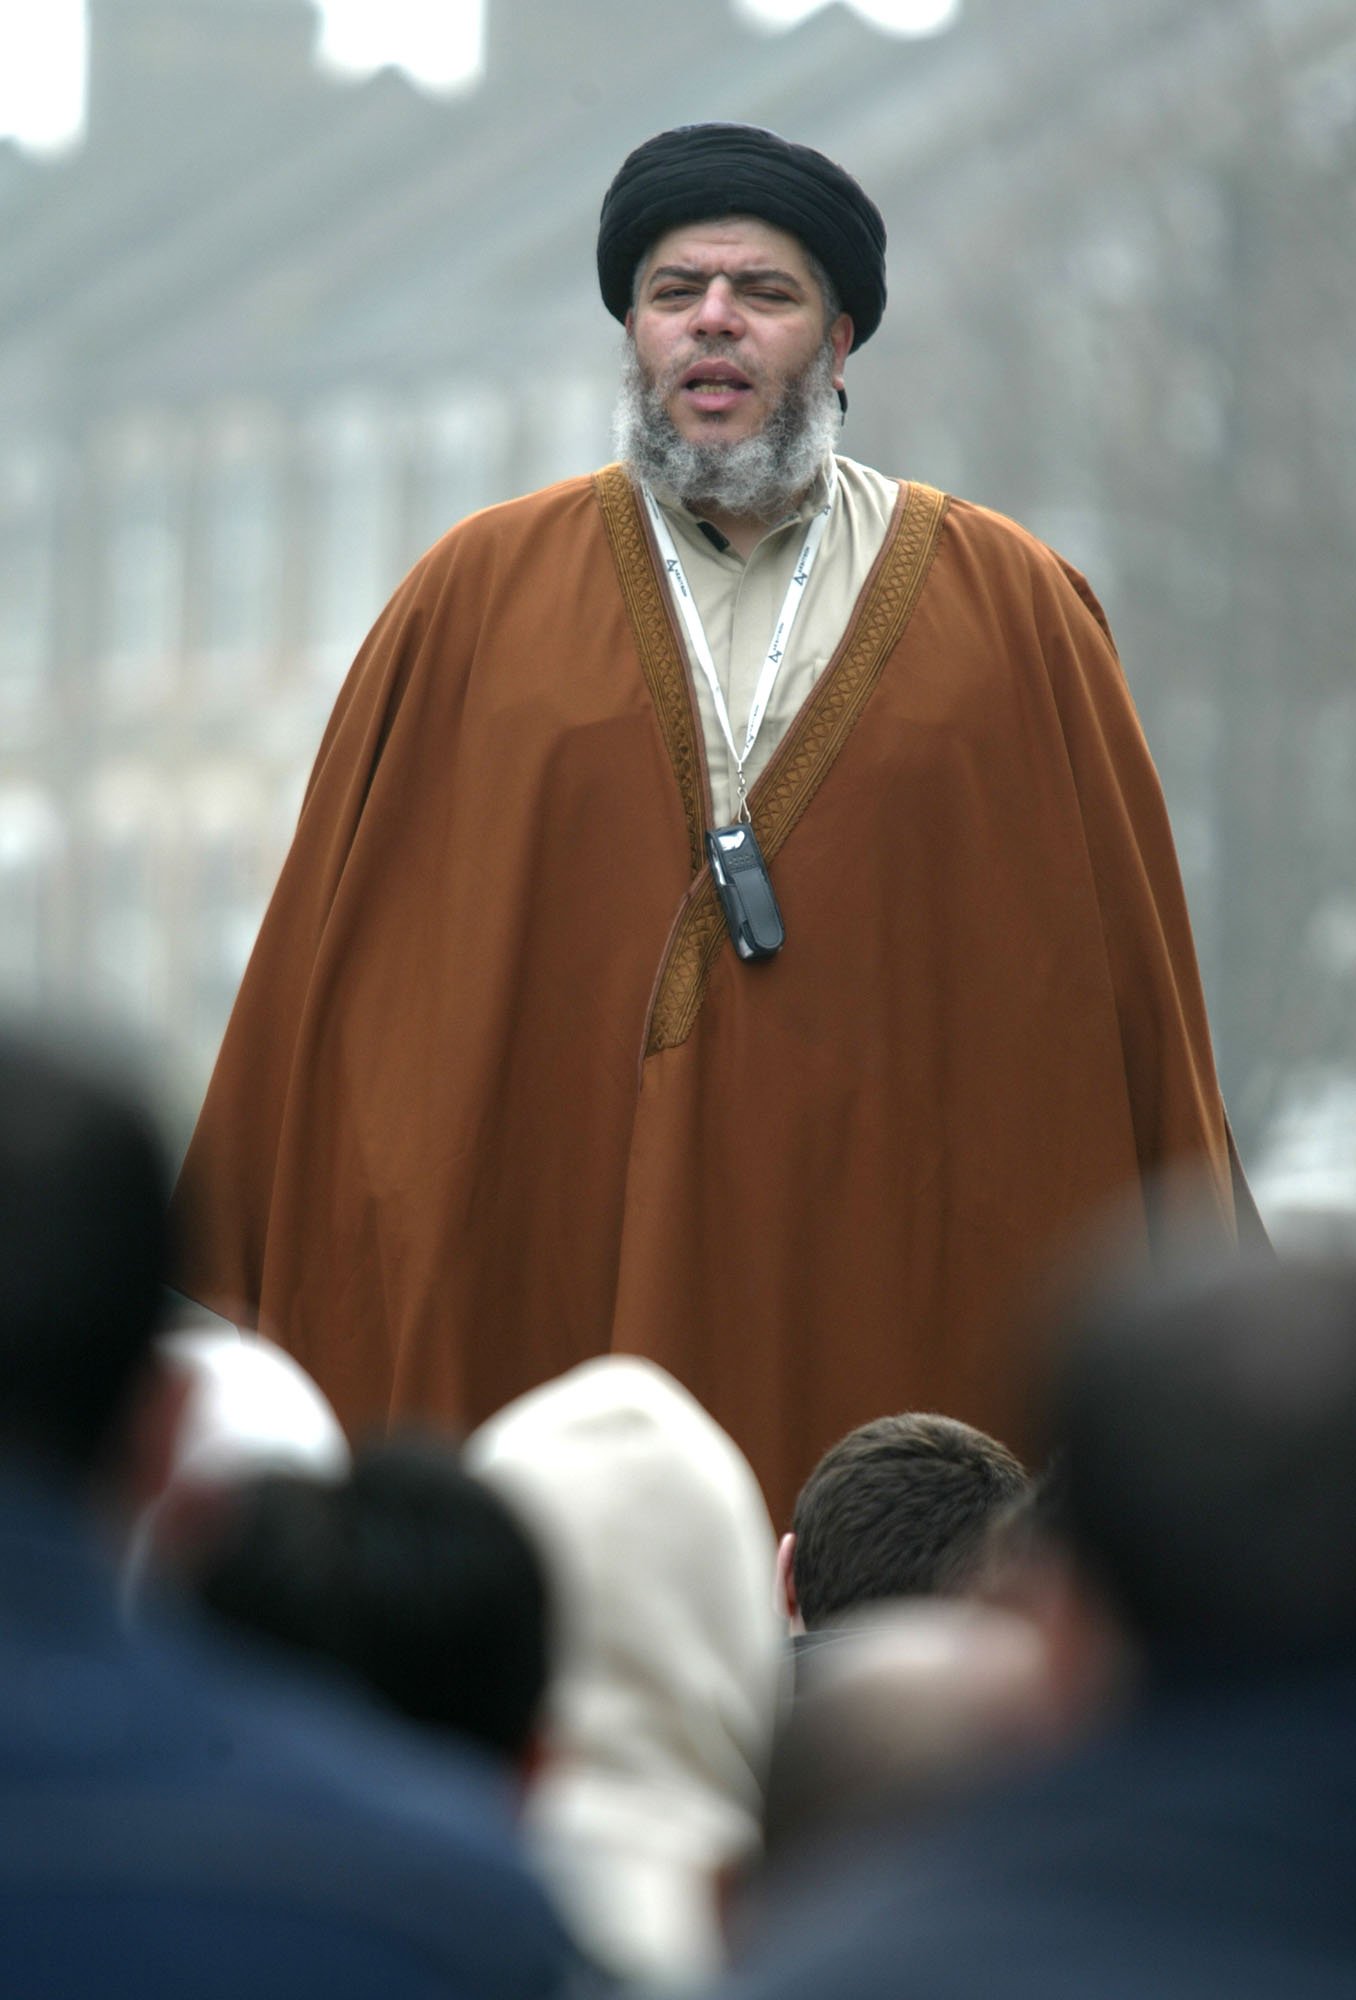 Muslim cleric Mustafa Kamel Mustafa prays in a street outside his Mosque in north London, on March 28, 2003.